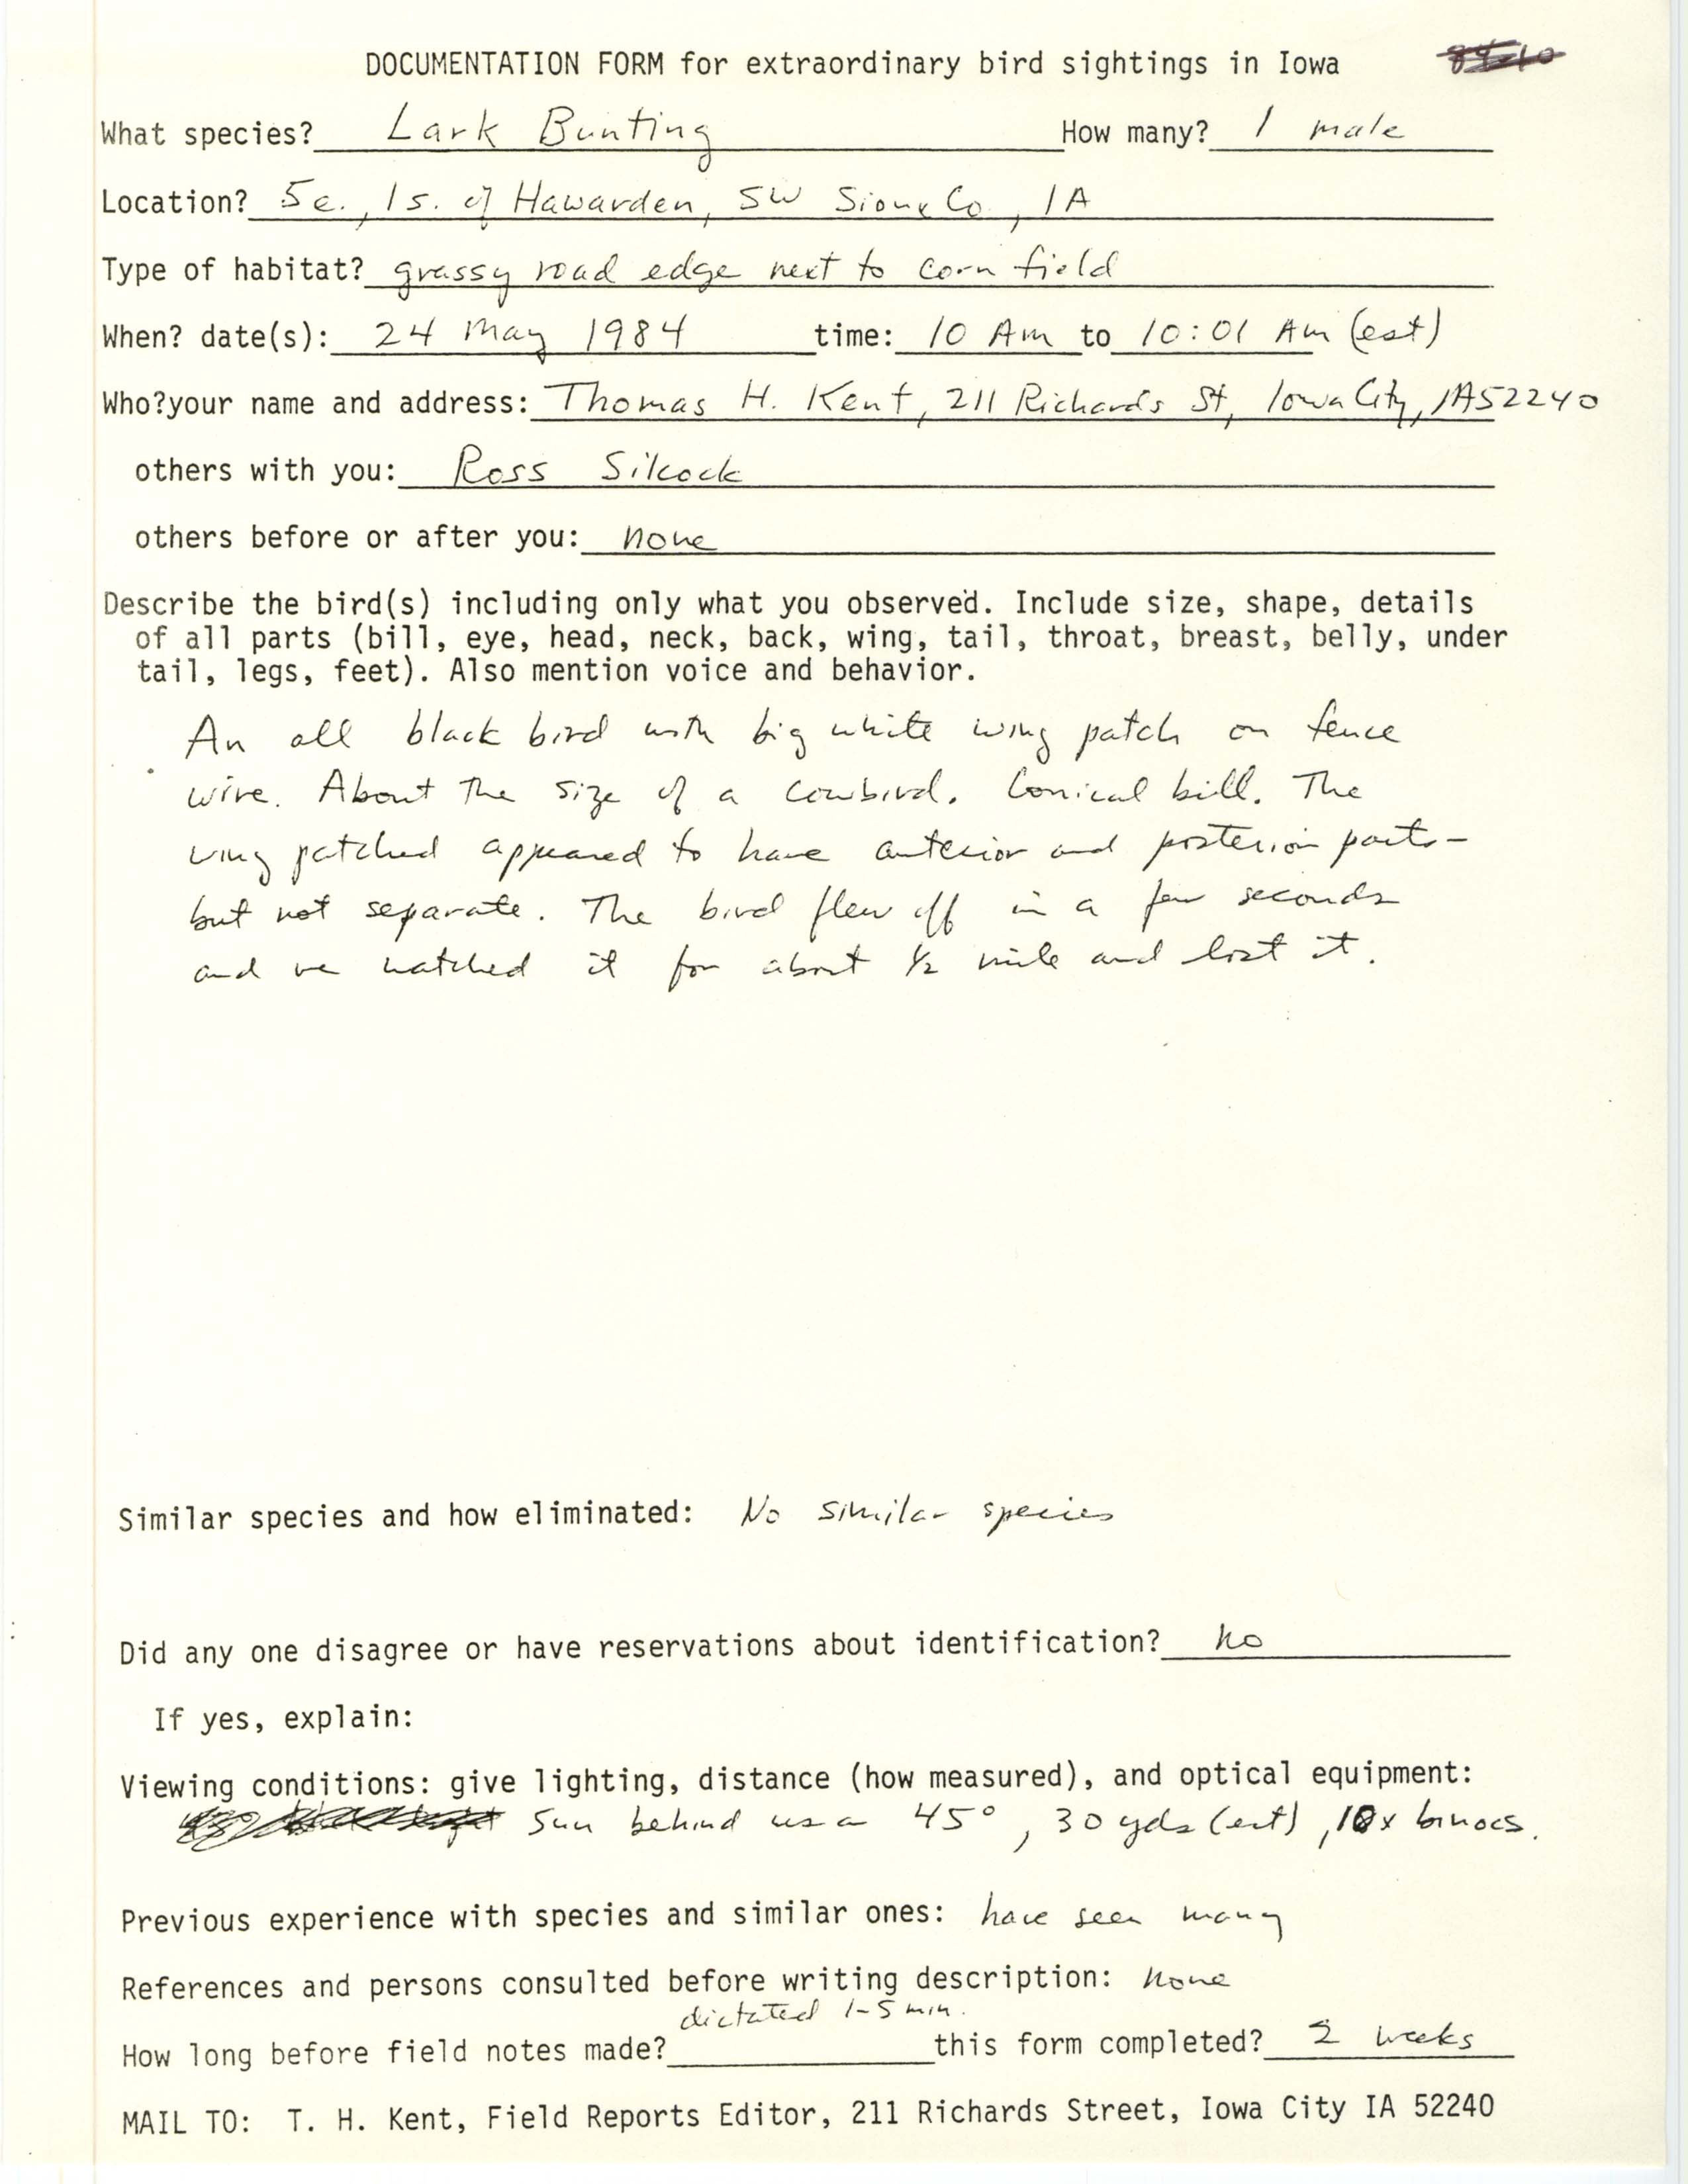 Rare bird documentation form for Lark Bunting east of Hawarden in 1984